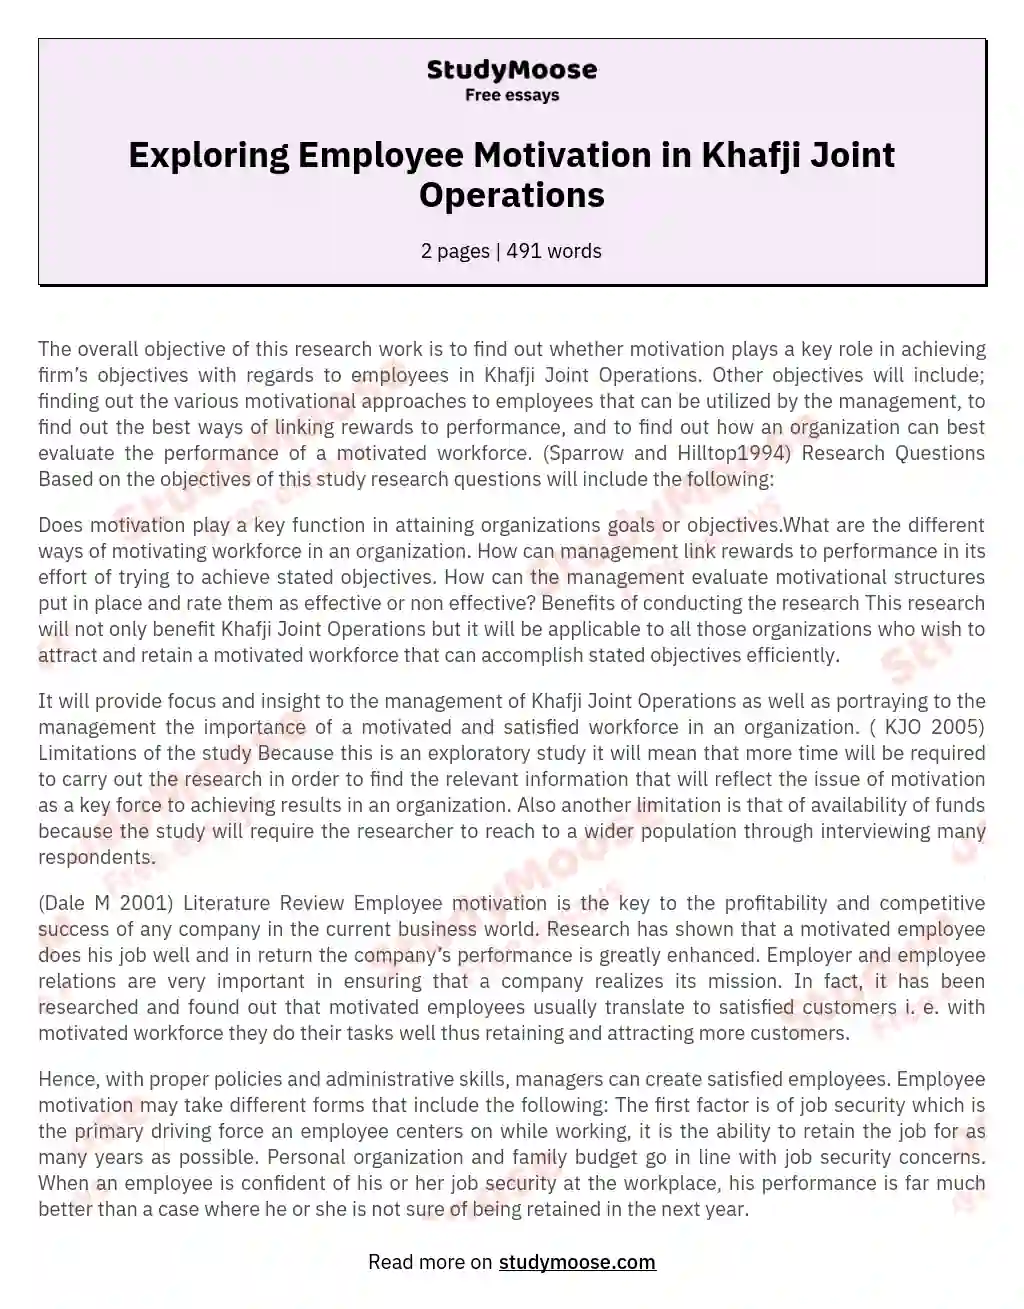 Exploring Employee Motivation in Khafji Joint Operations essay